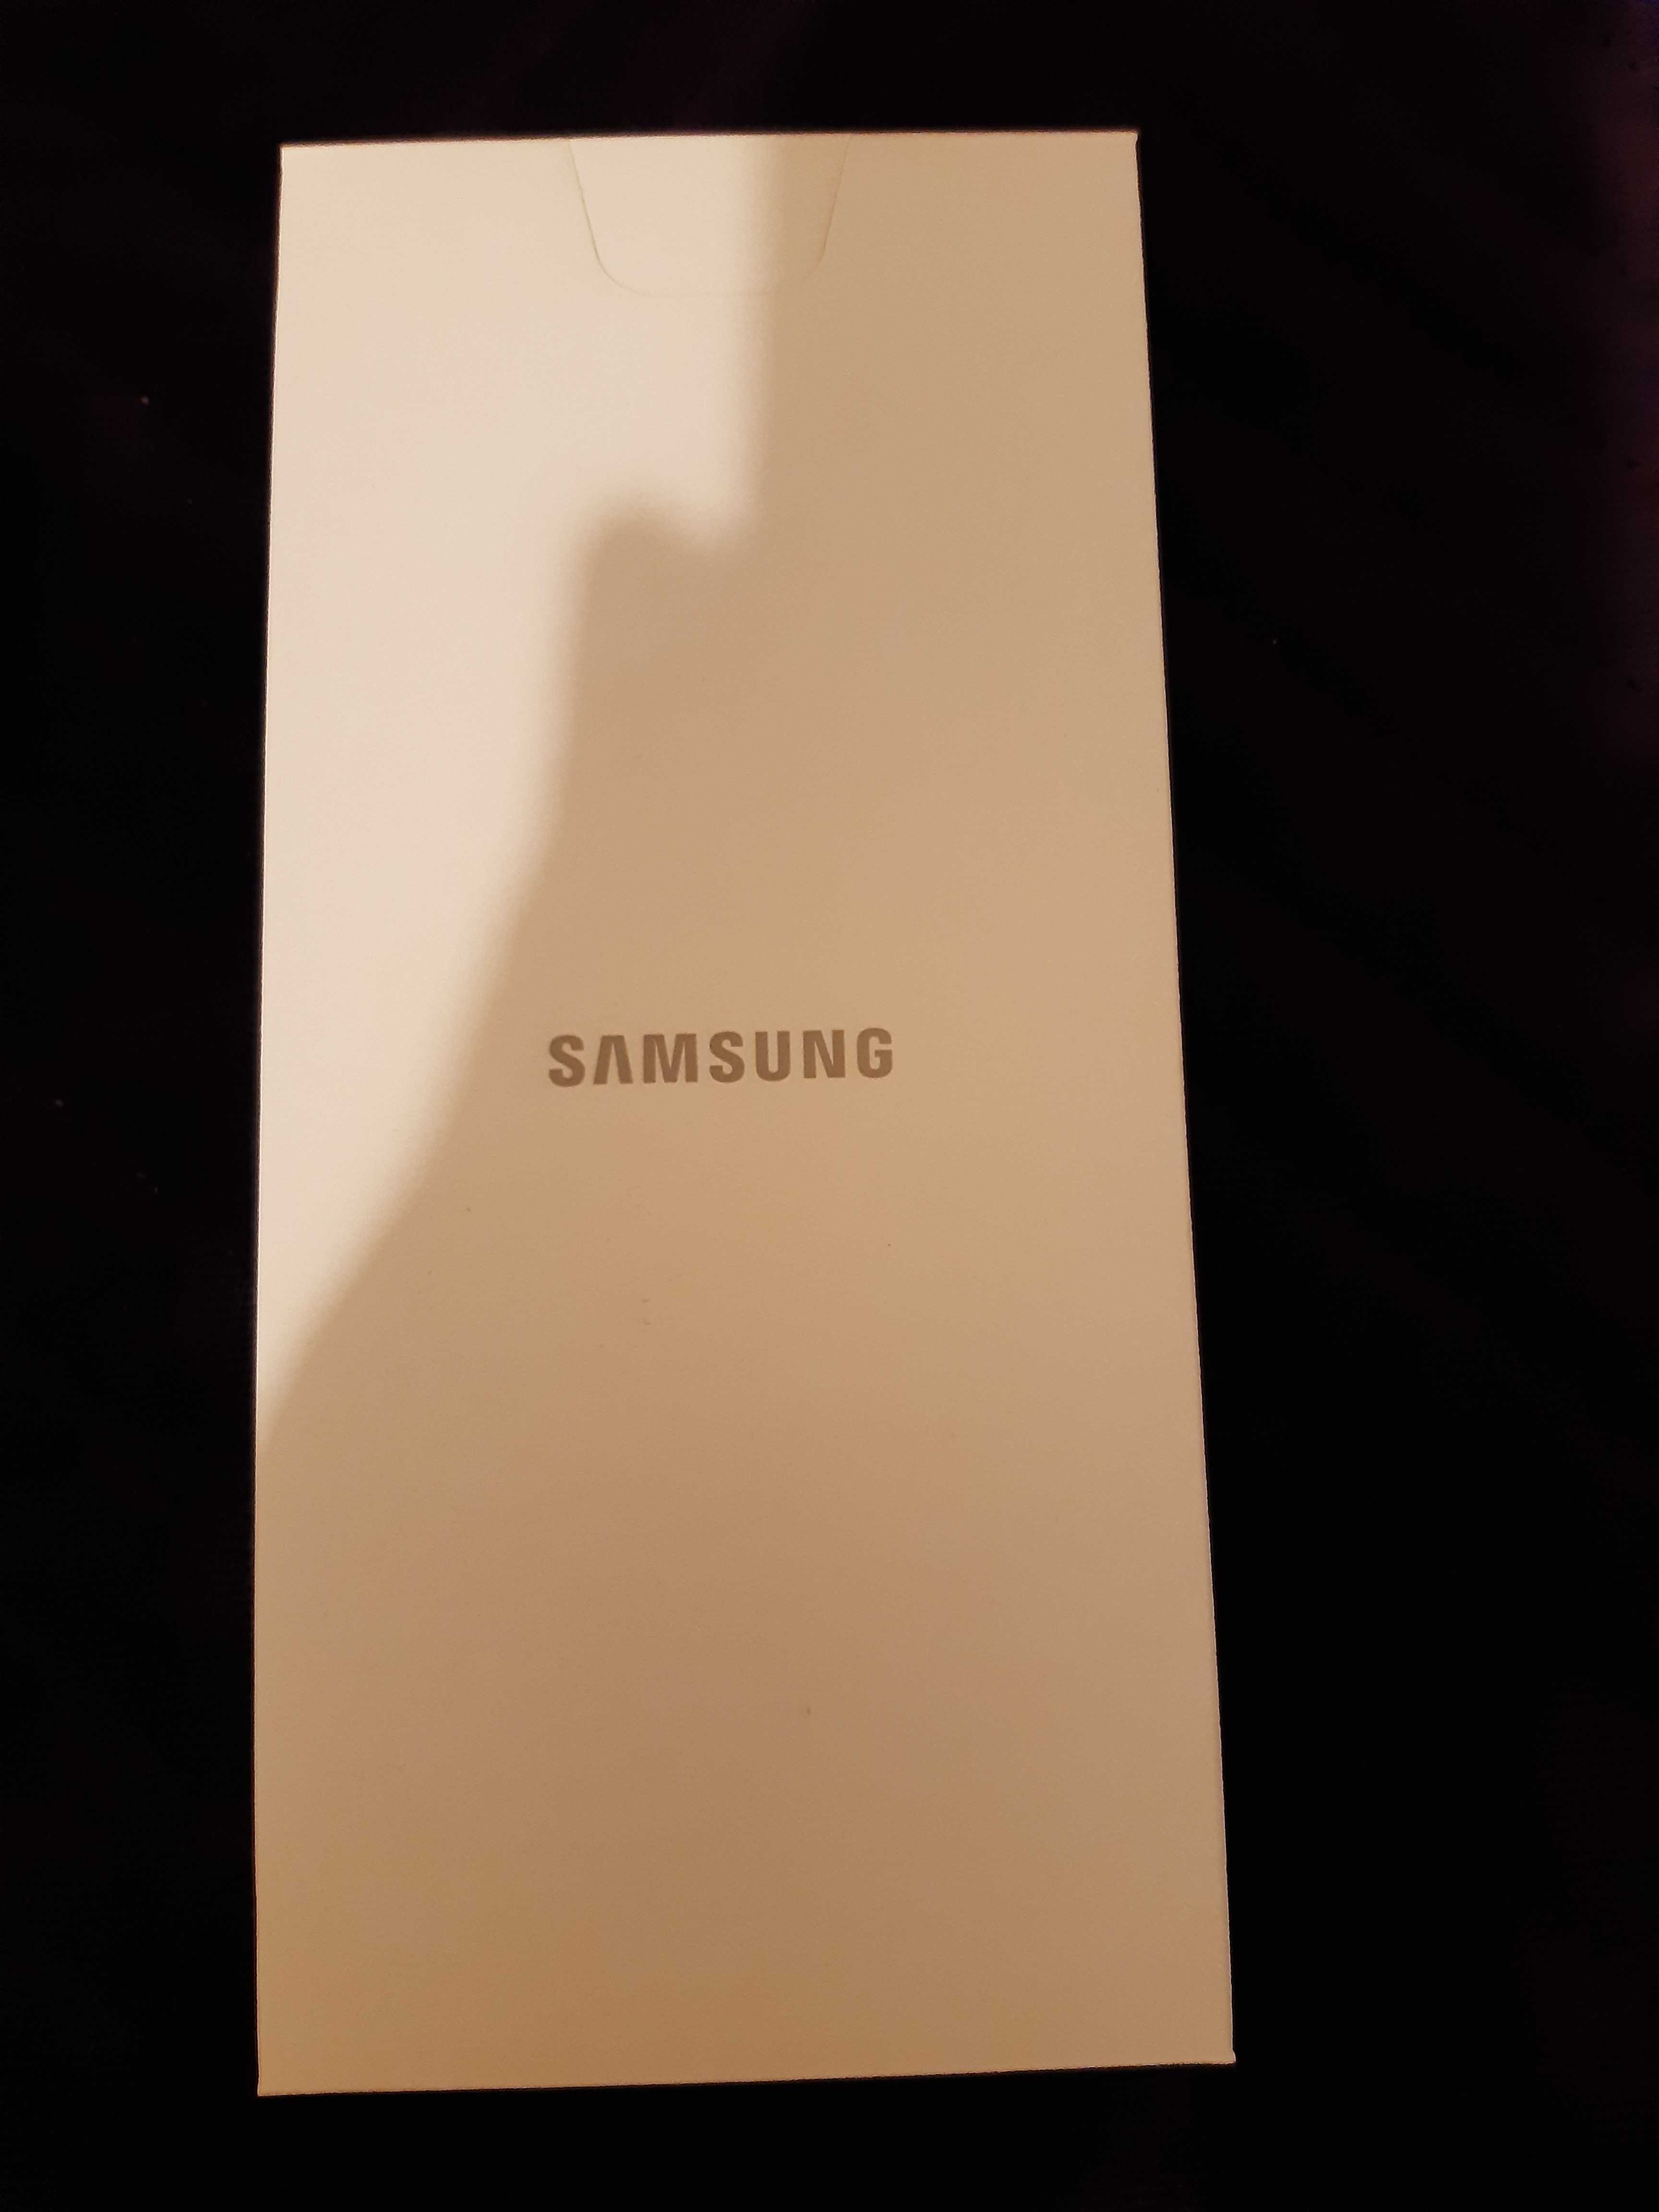 Smartfon Samsung Galaxy A31 64GB DS Black (SM-A315FZK)